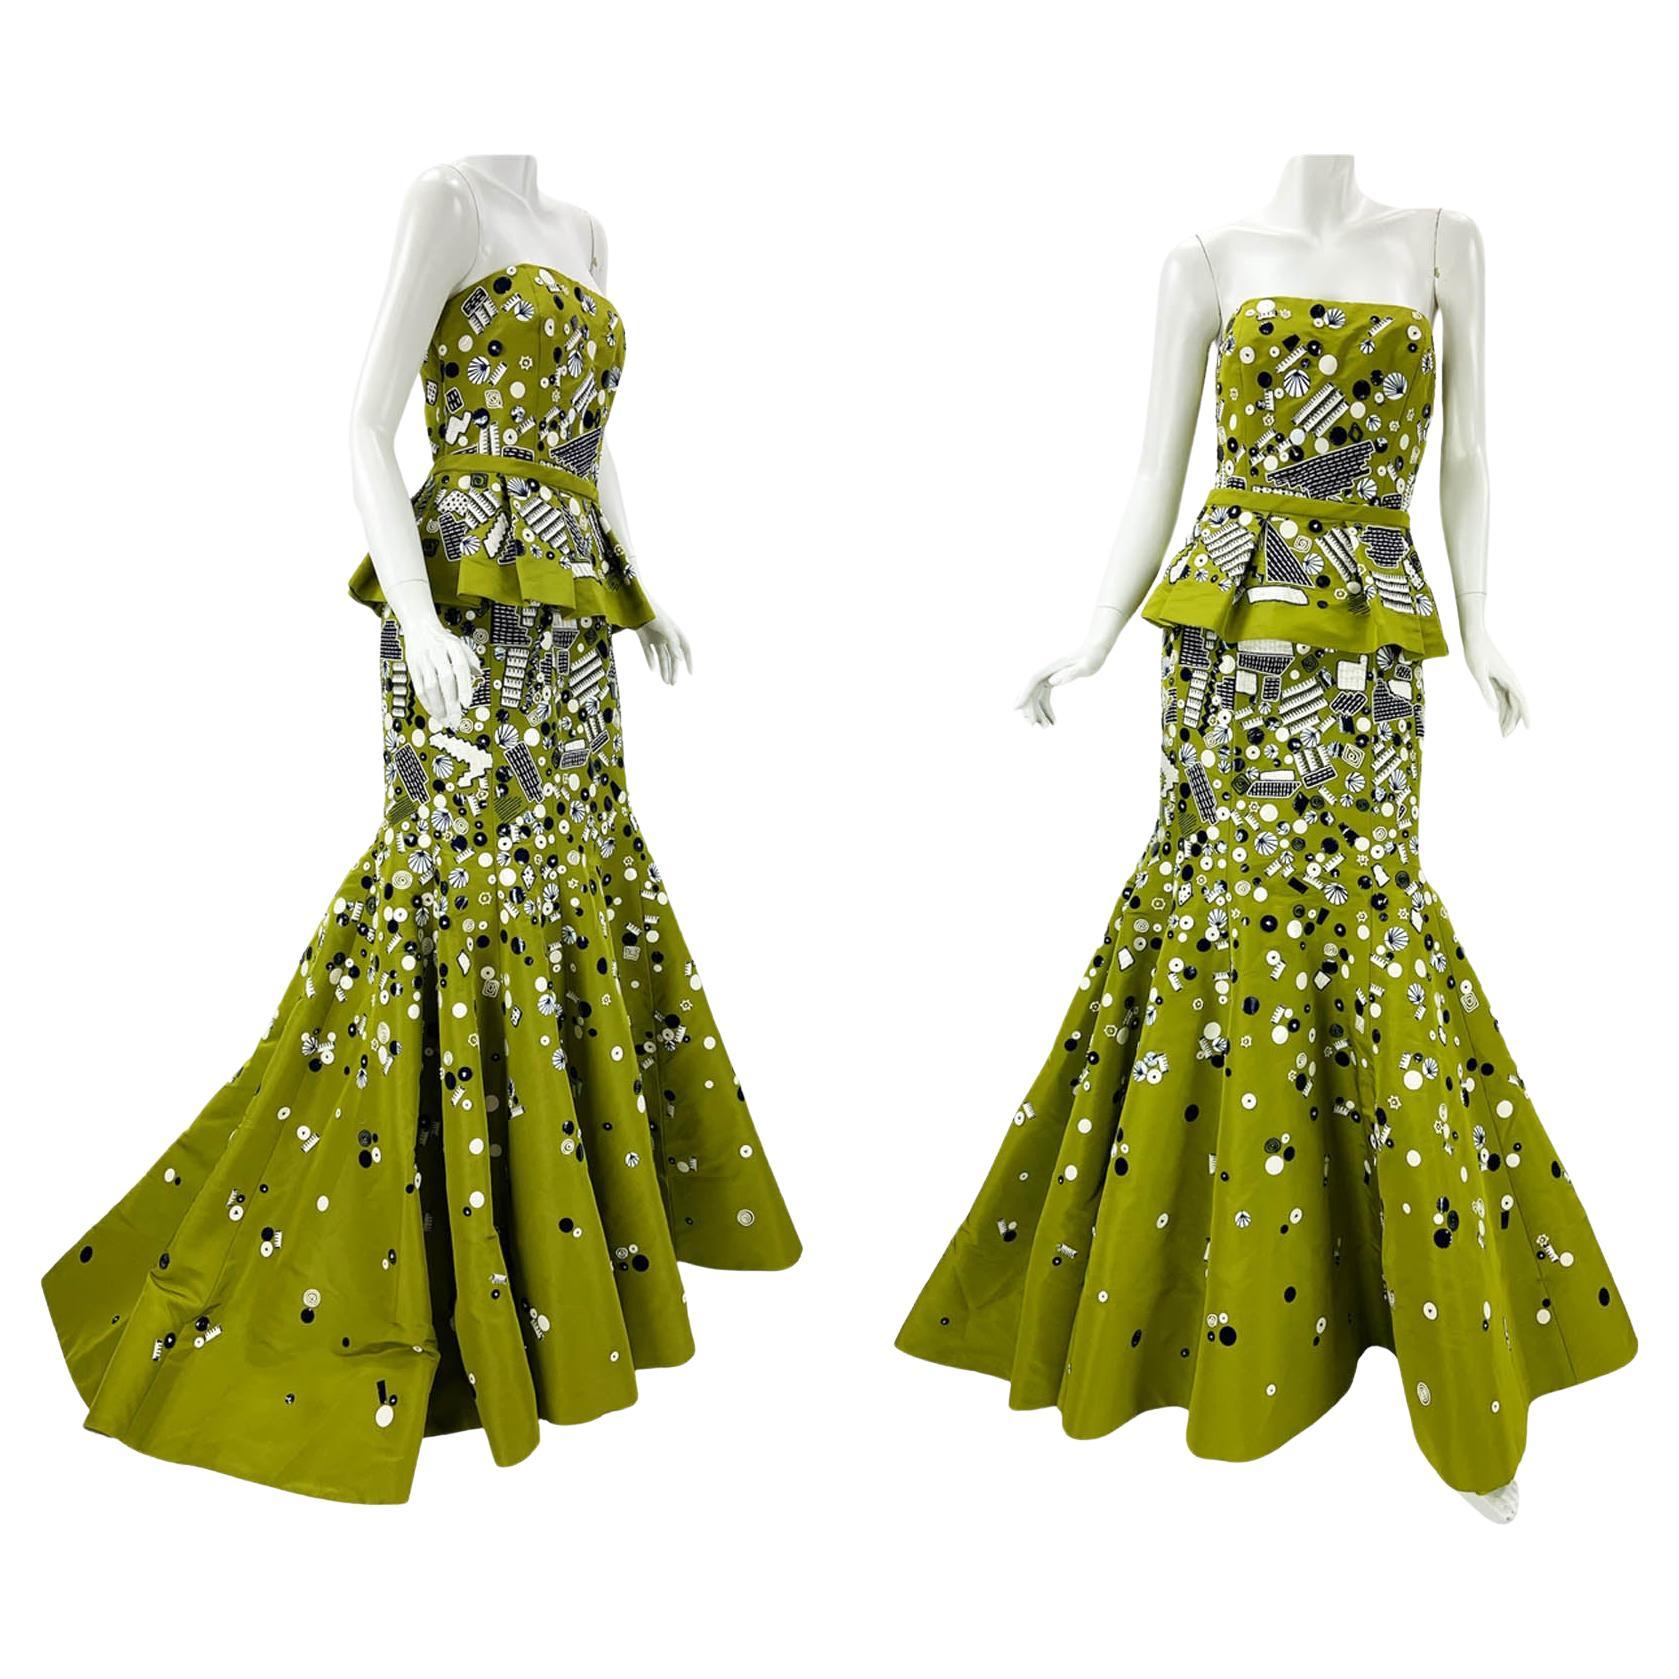 NWT Oscar de la Renta S/S 2009 Green Embellished Silk Taffeta Peplum Dress US 10 For Sale